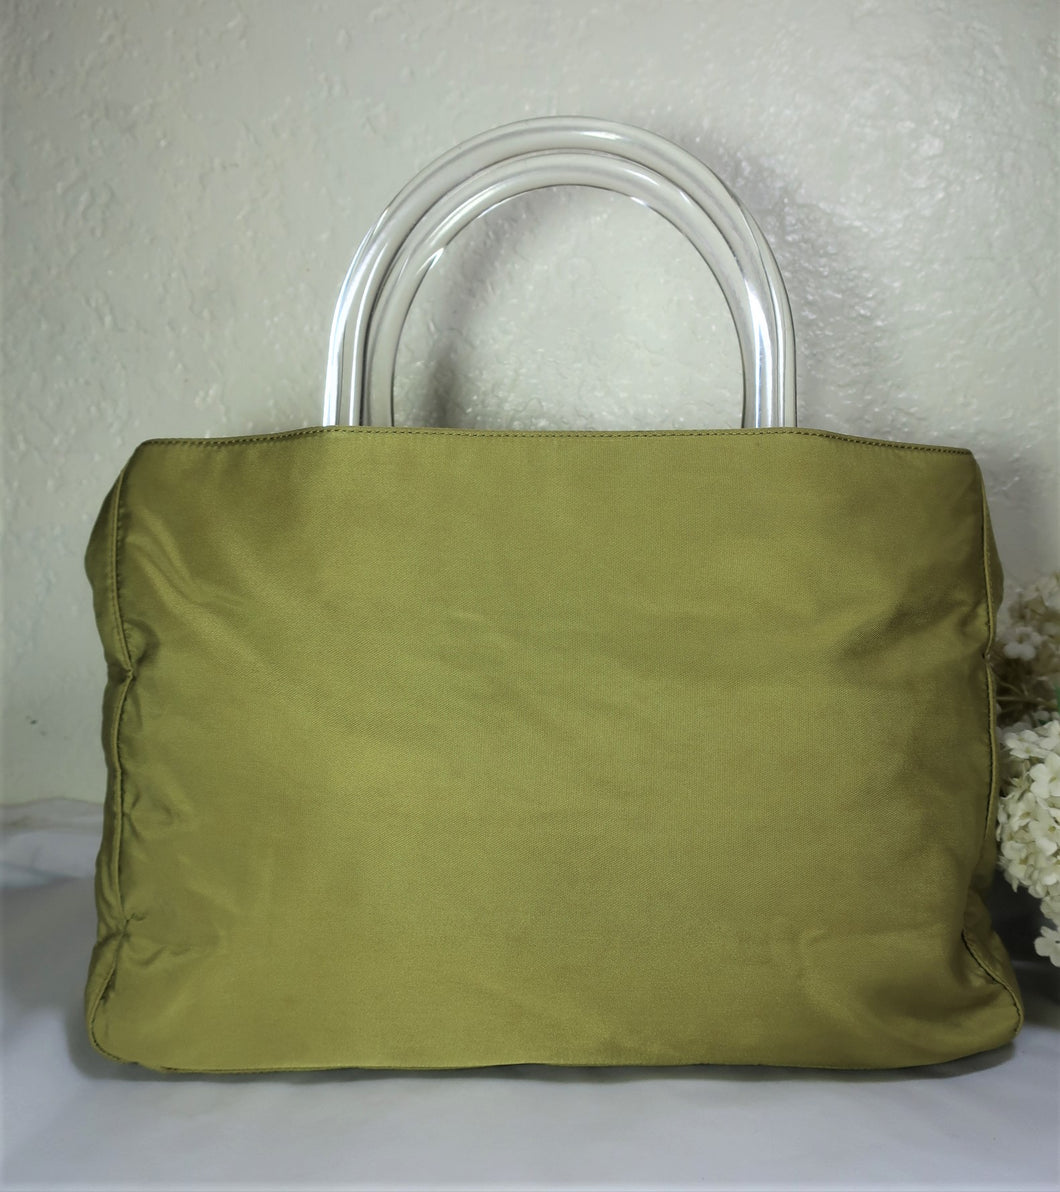 PRADA Green Nylon Lucite Clear Handles Small Tote Hand Bag